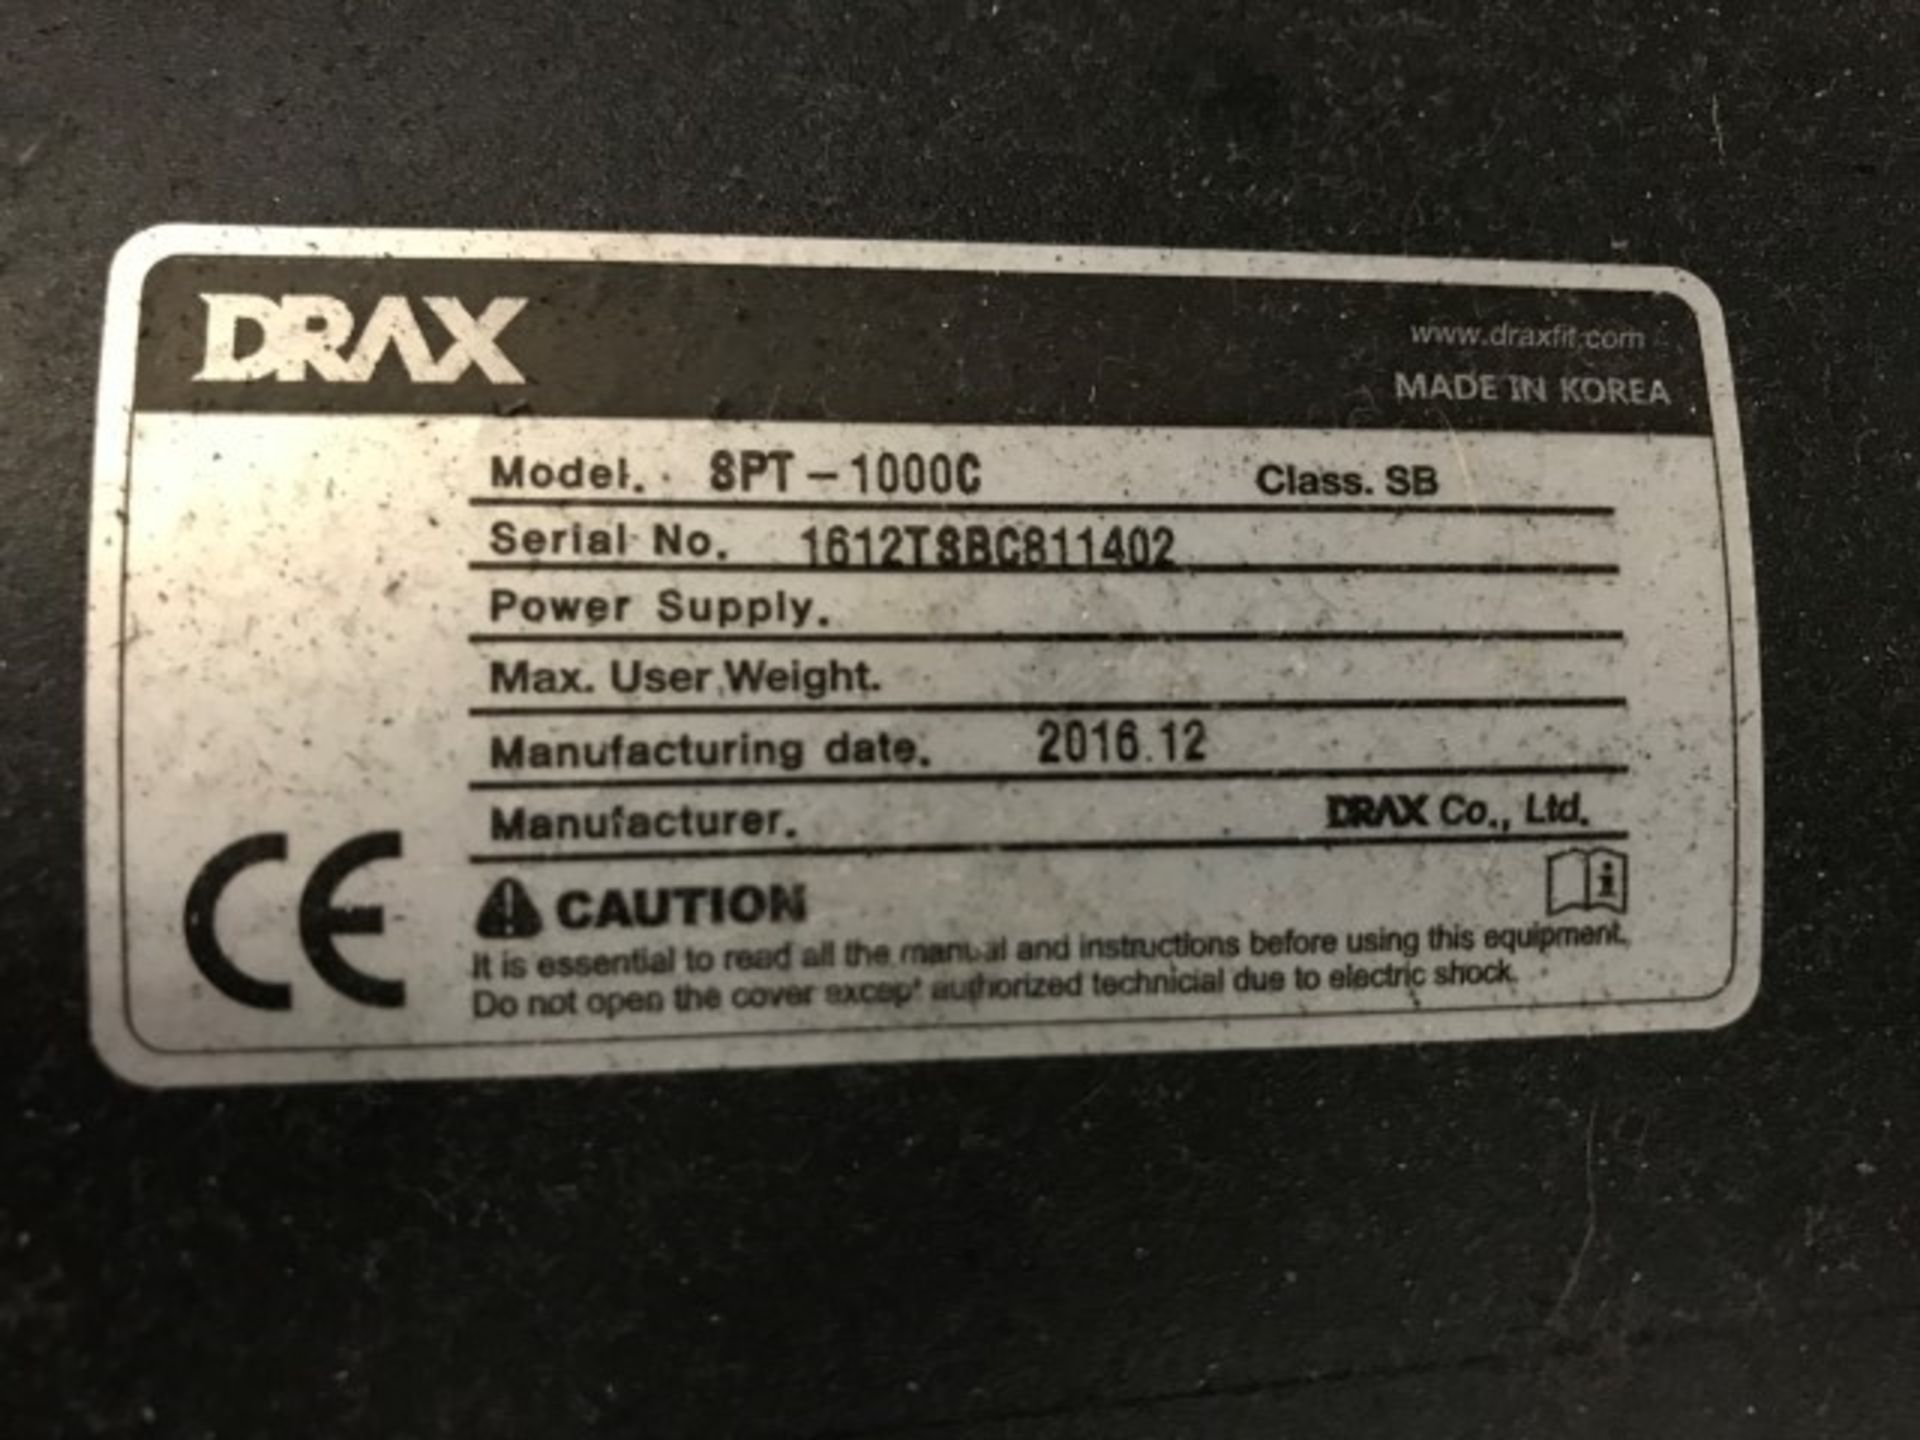 Speedfit DRAX 8PT-1000C curved treadmill (2016) - Image 3 of 3